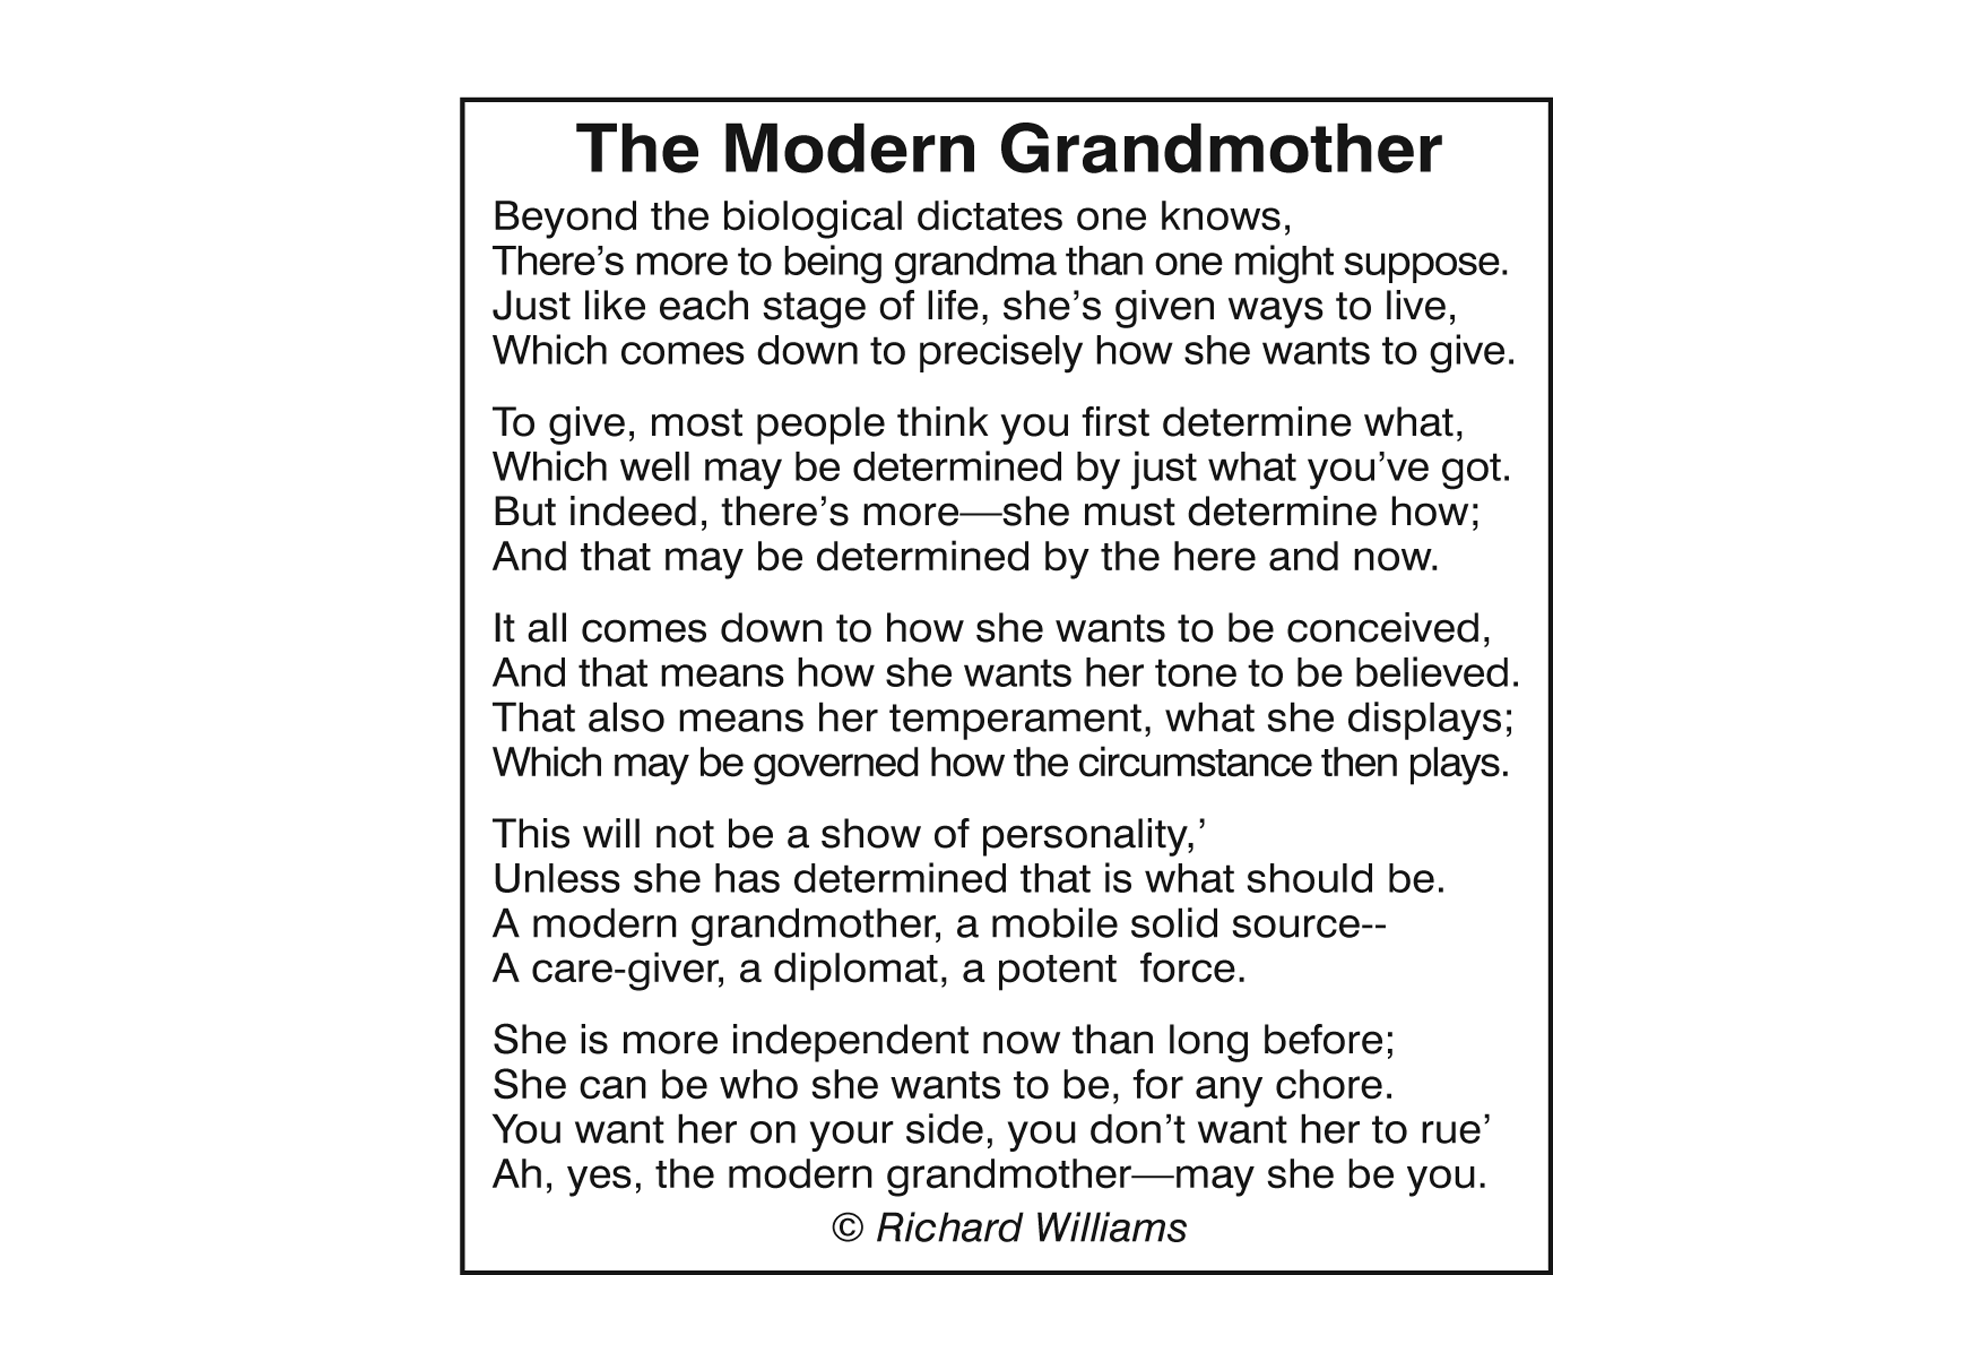 Richard Williams Poem: The Modern Grandmother